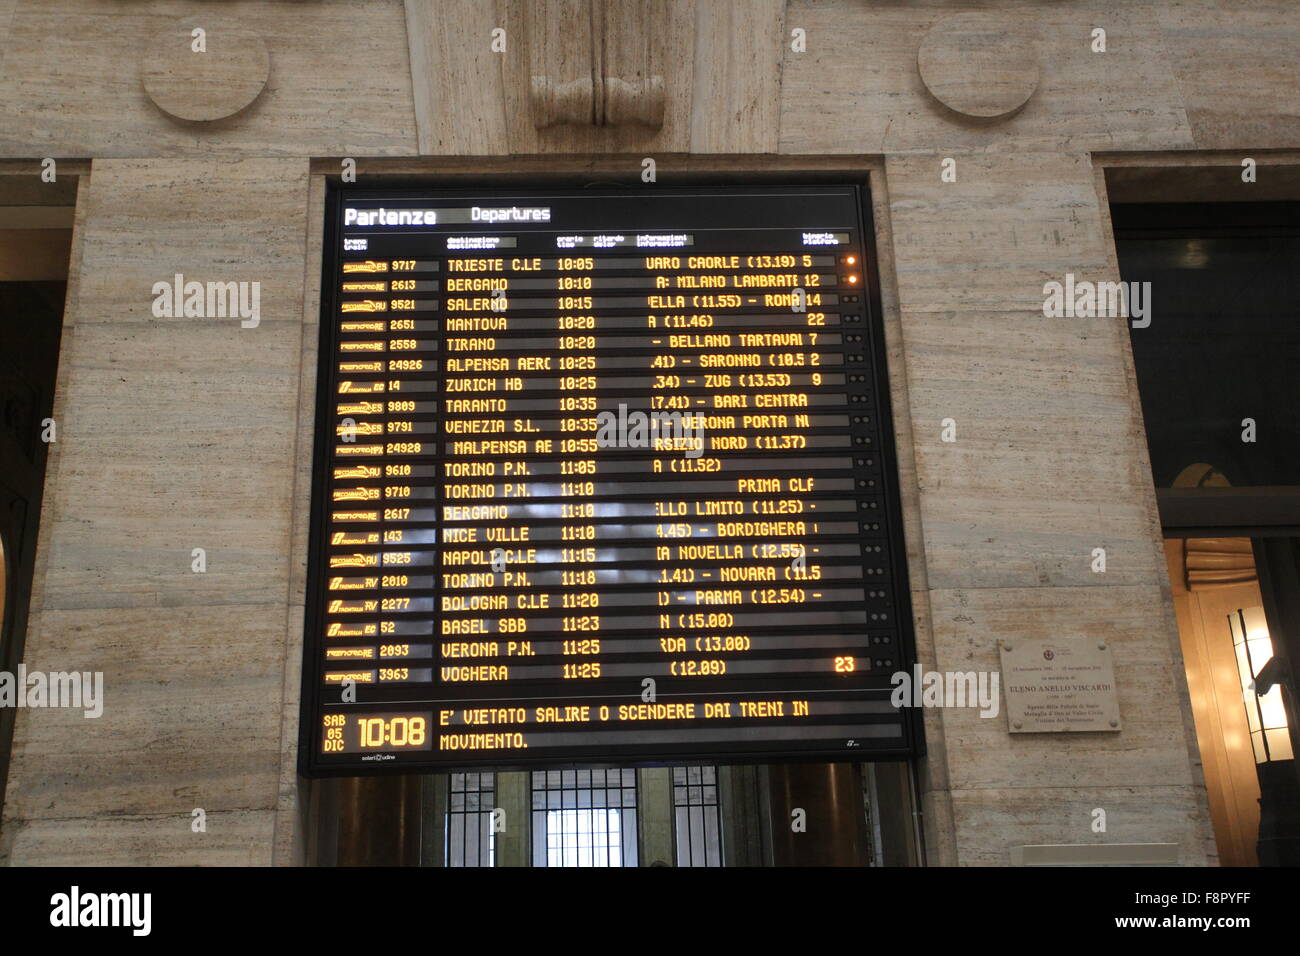 Milan railway station train departure board Stock Photo